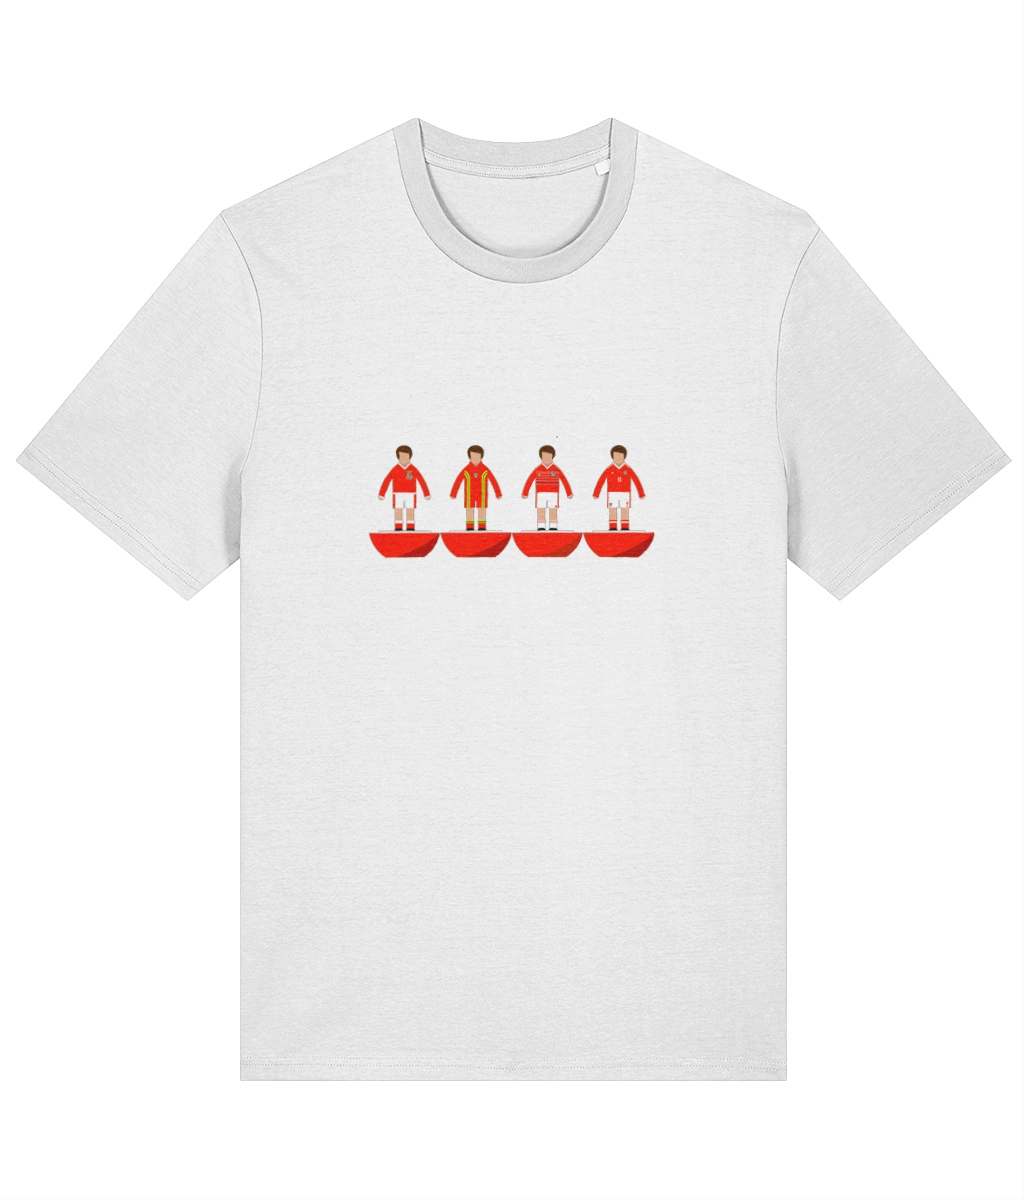 Football Kits 'Wales combined' Unisex T-Shirt